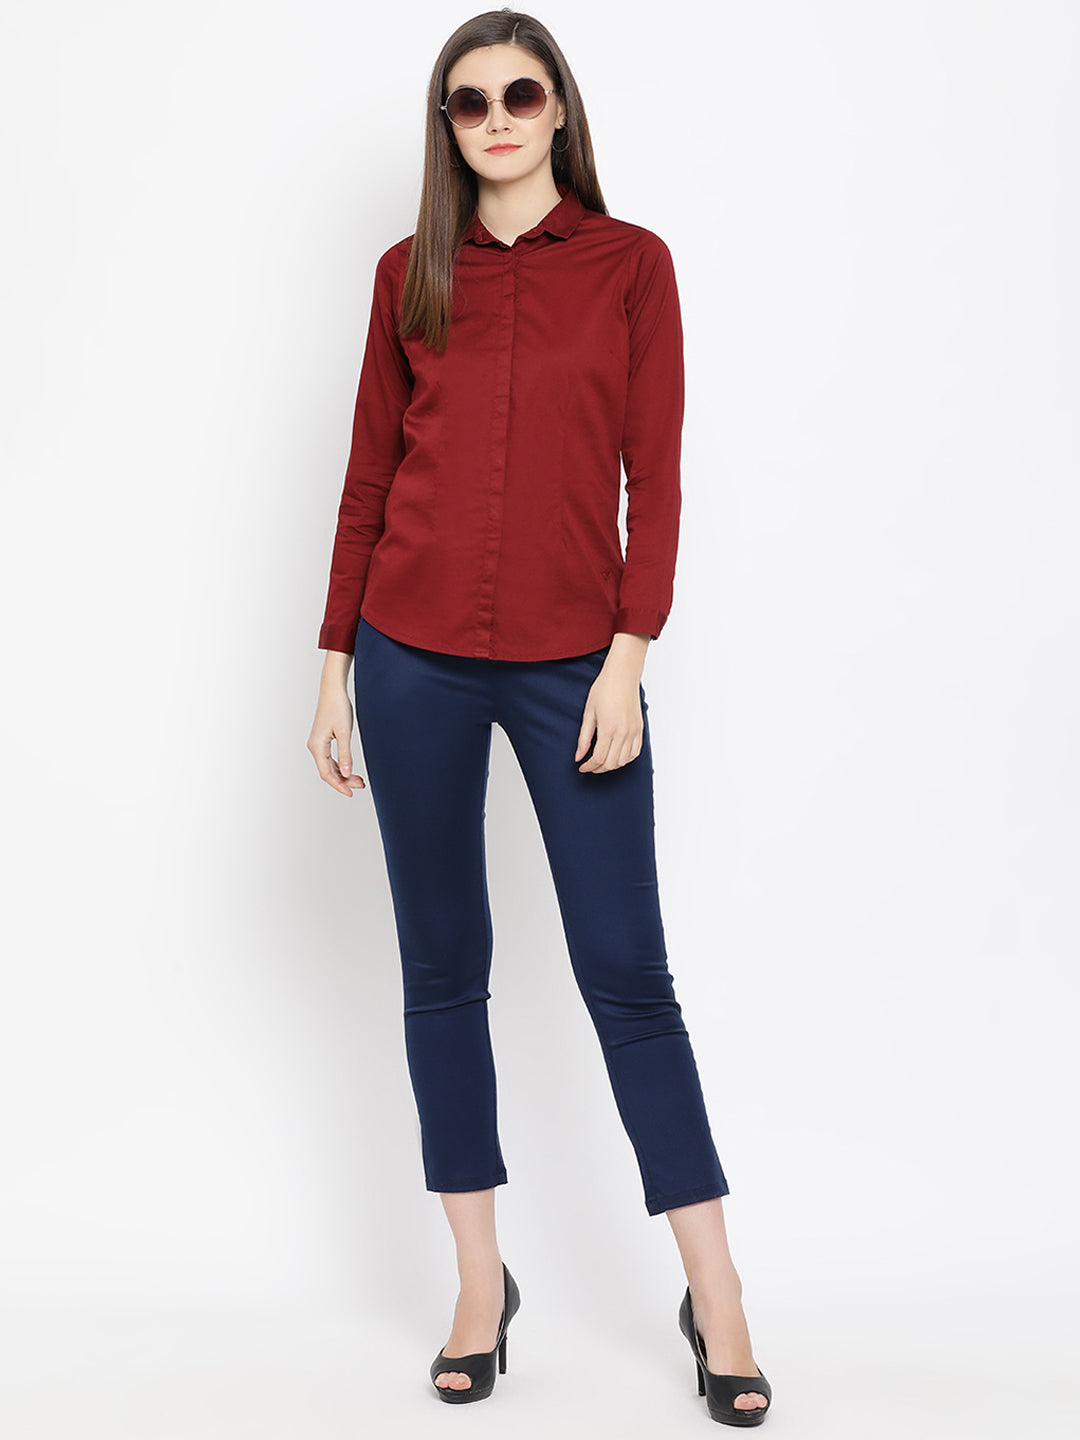 Red Button up Shirt - Women Shirts